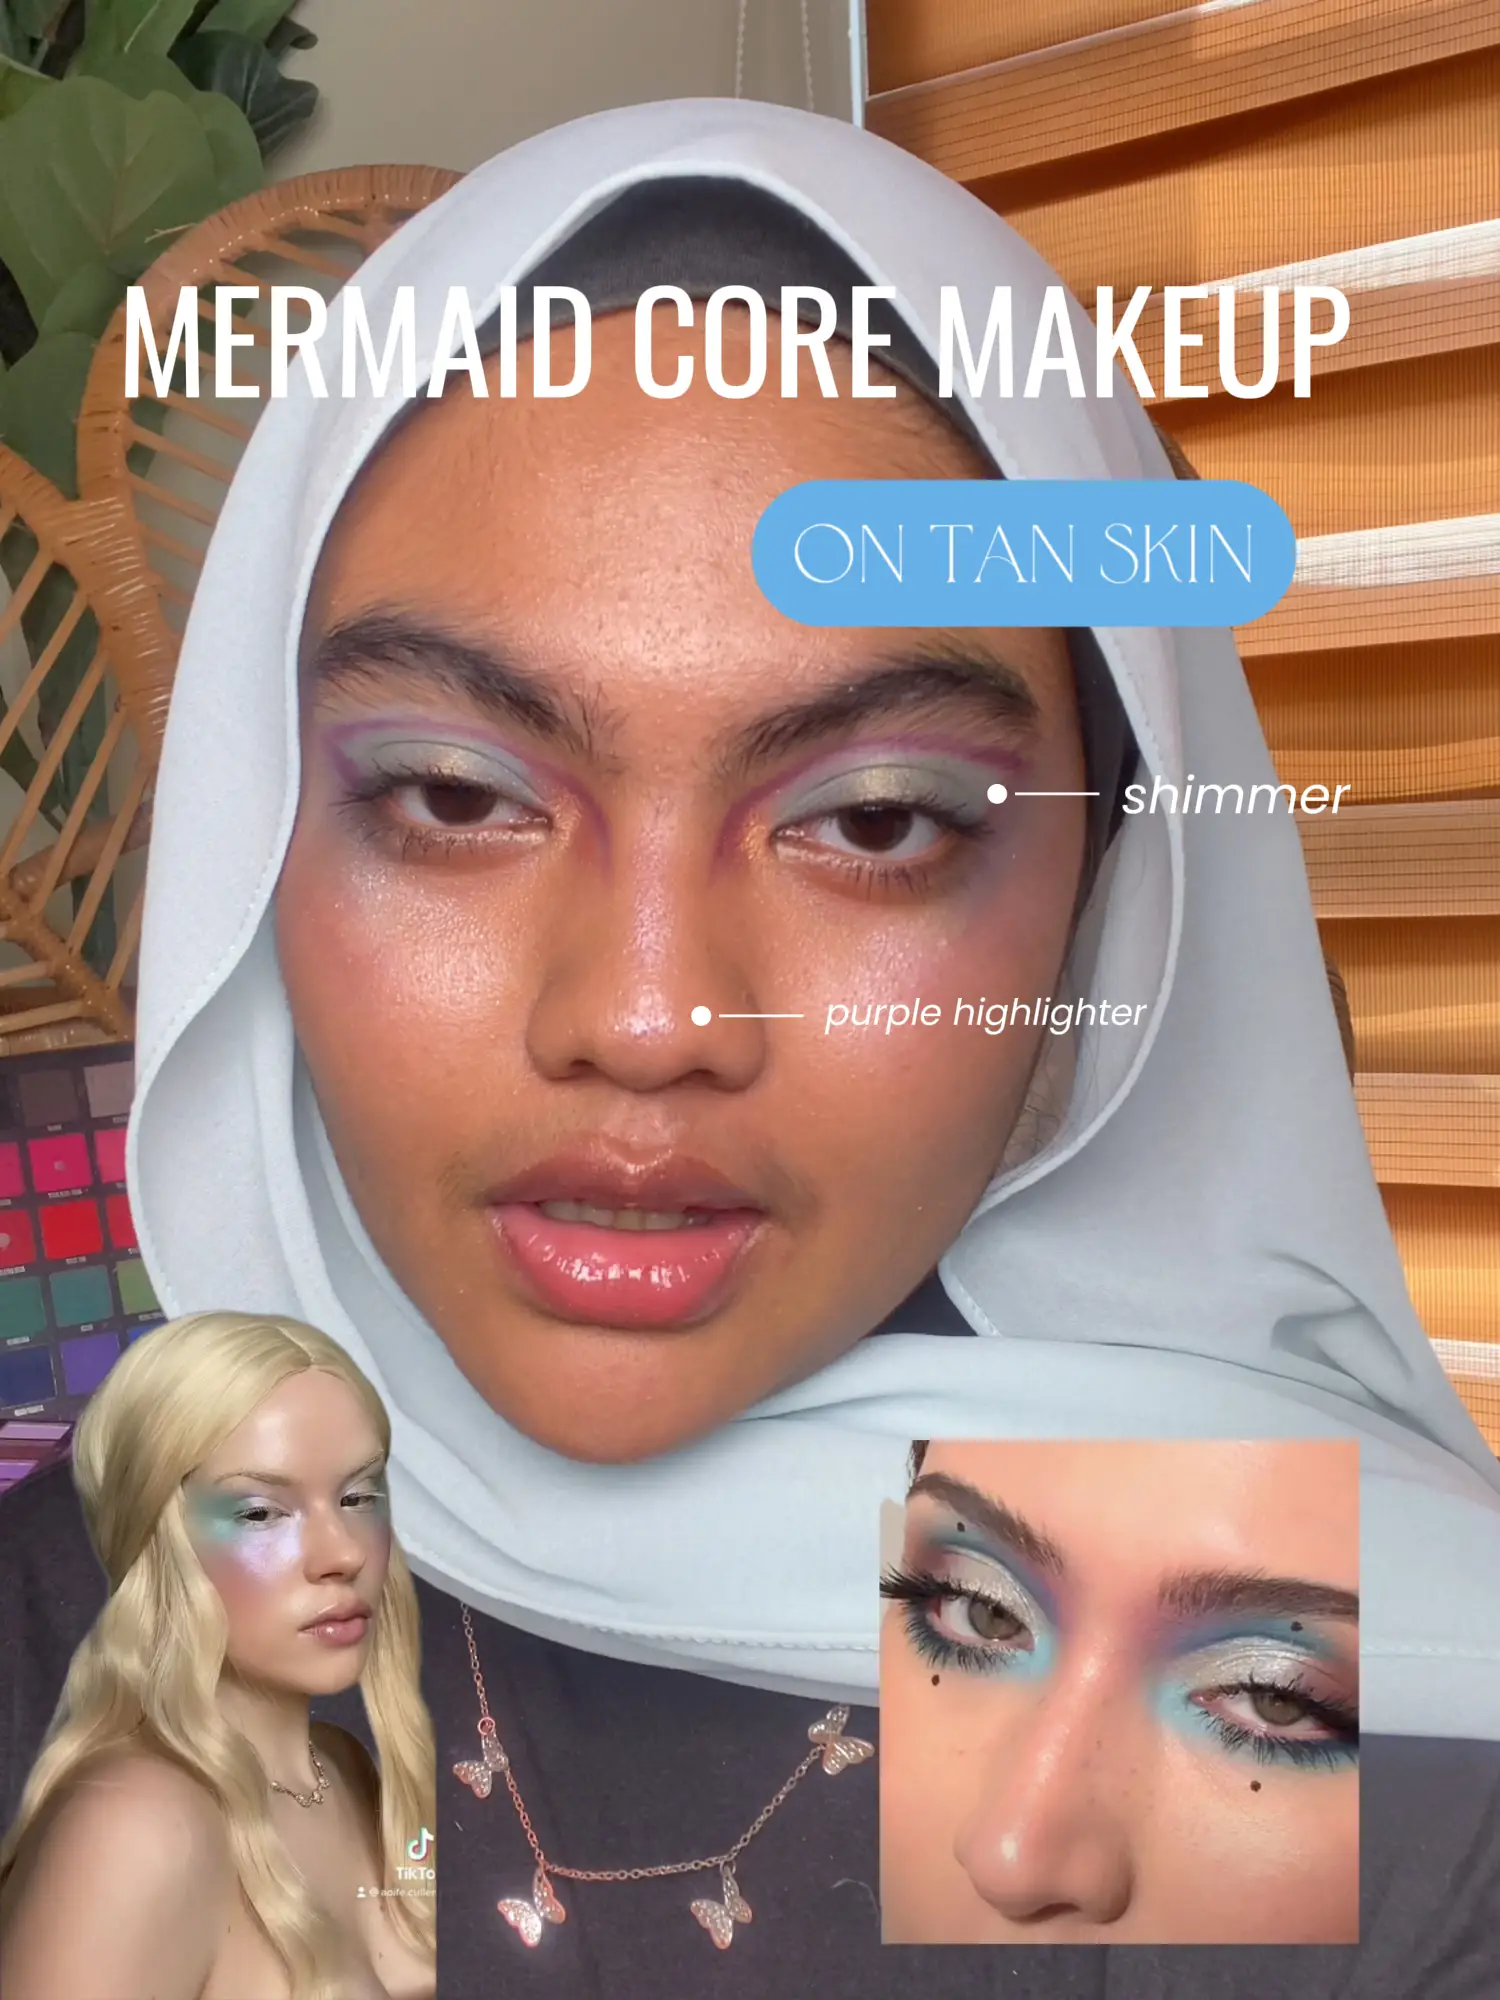 The Best Mermaidcore Makeup Looks to Recreate